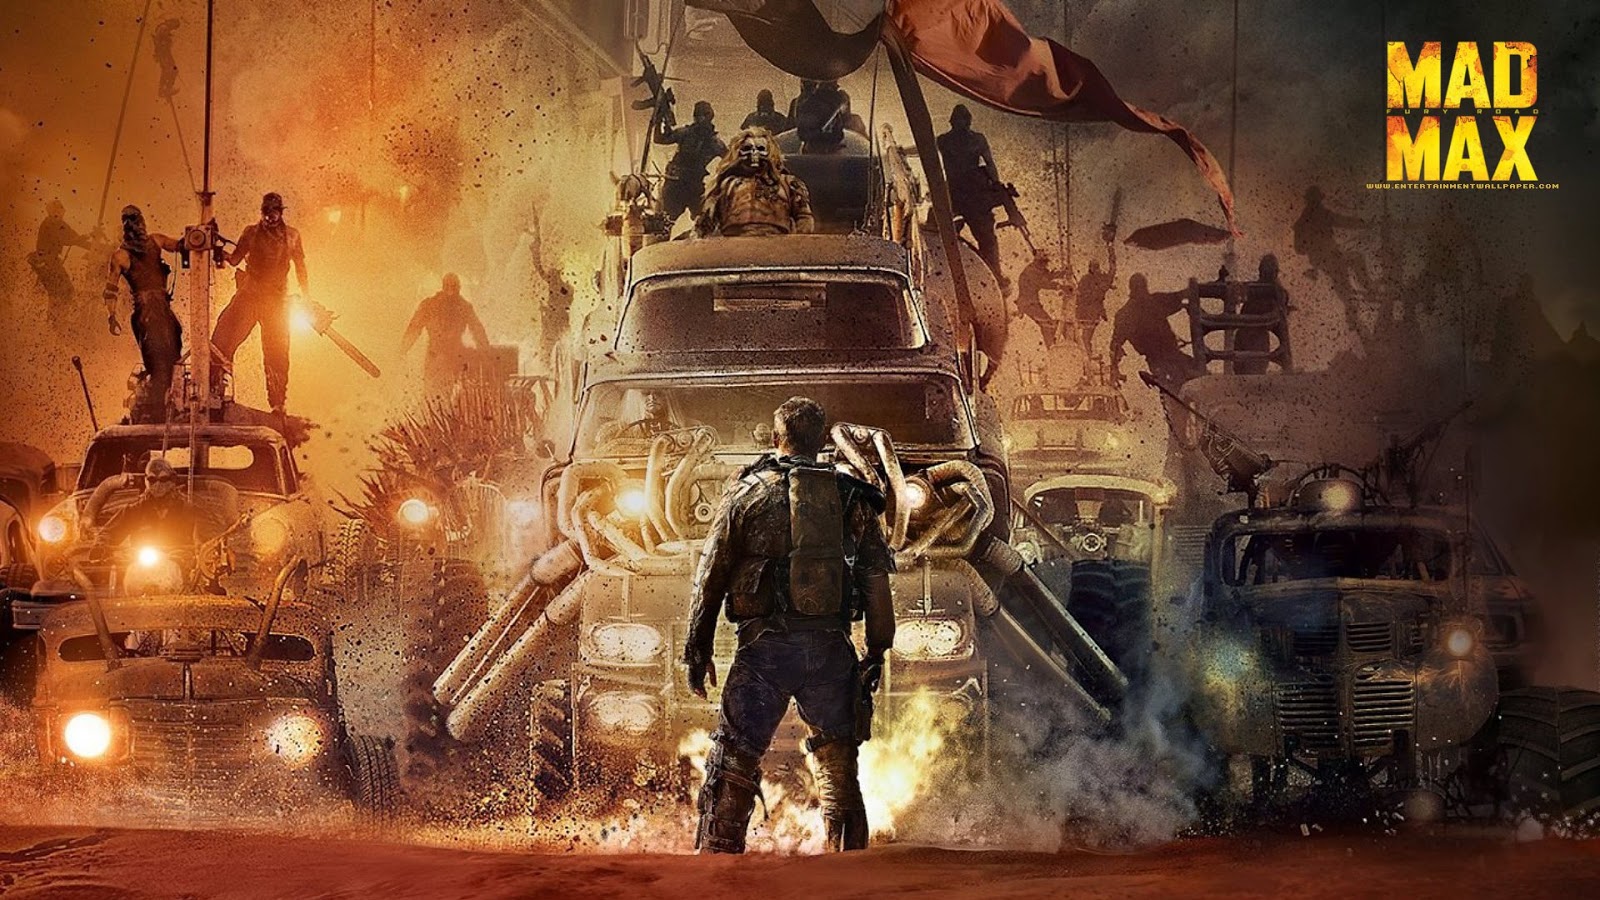 English Club: Movie reviews: Review of movie Mad Max: Fury Road 2015